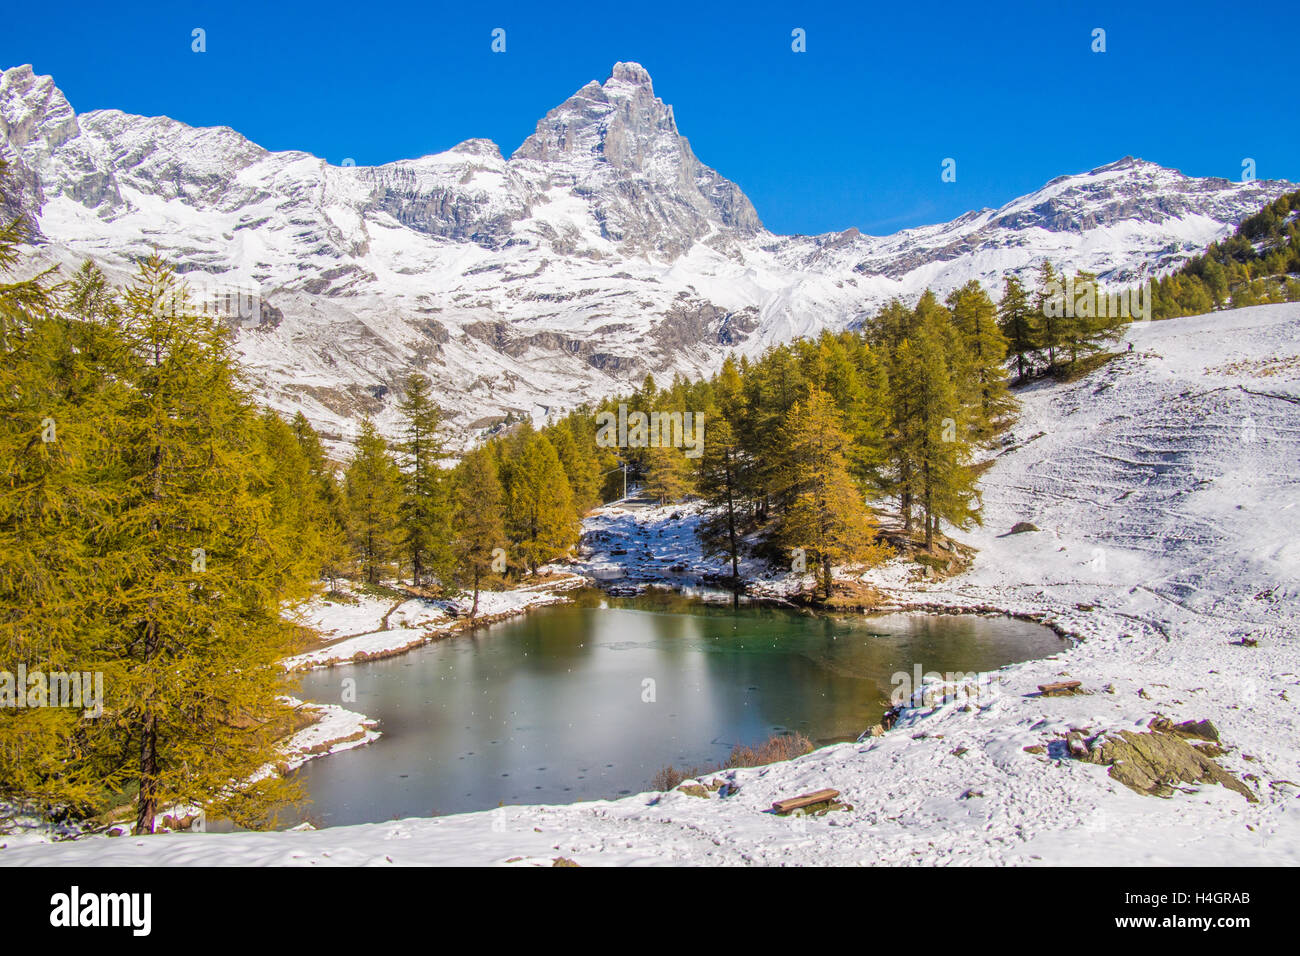 Lago Blu (Modro jezero) mit dem Matterhorn-Berg (aka "Matterhorn" in der Schweiz) hinter, Aostatal, Italien. Stockfoto